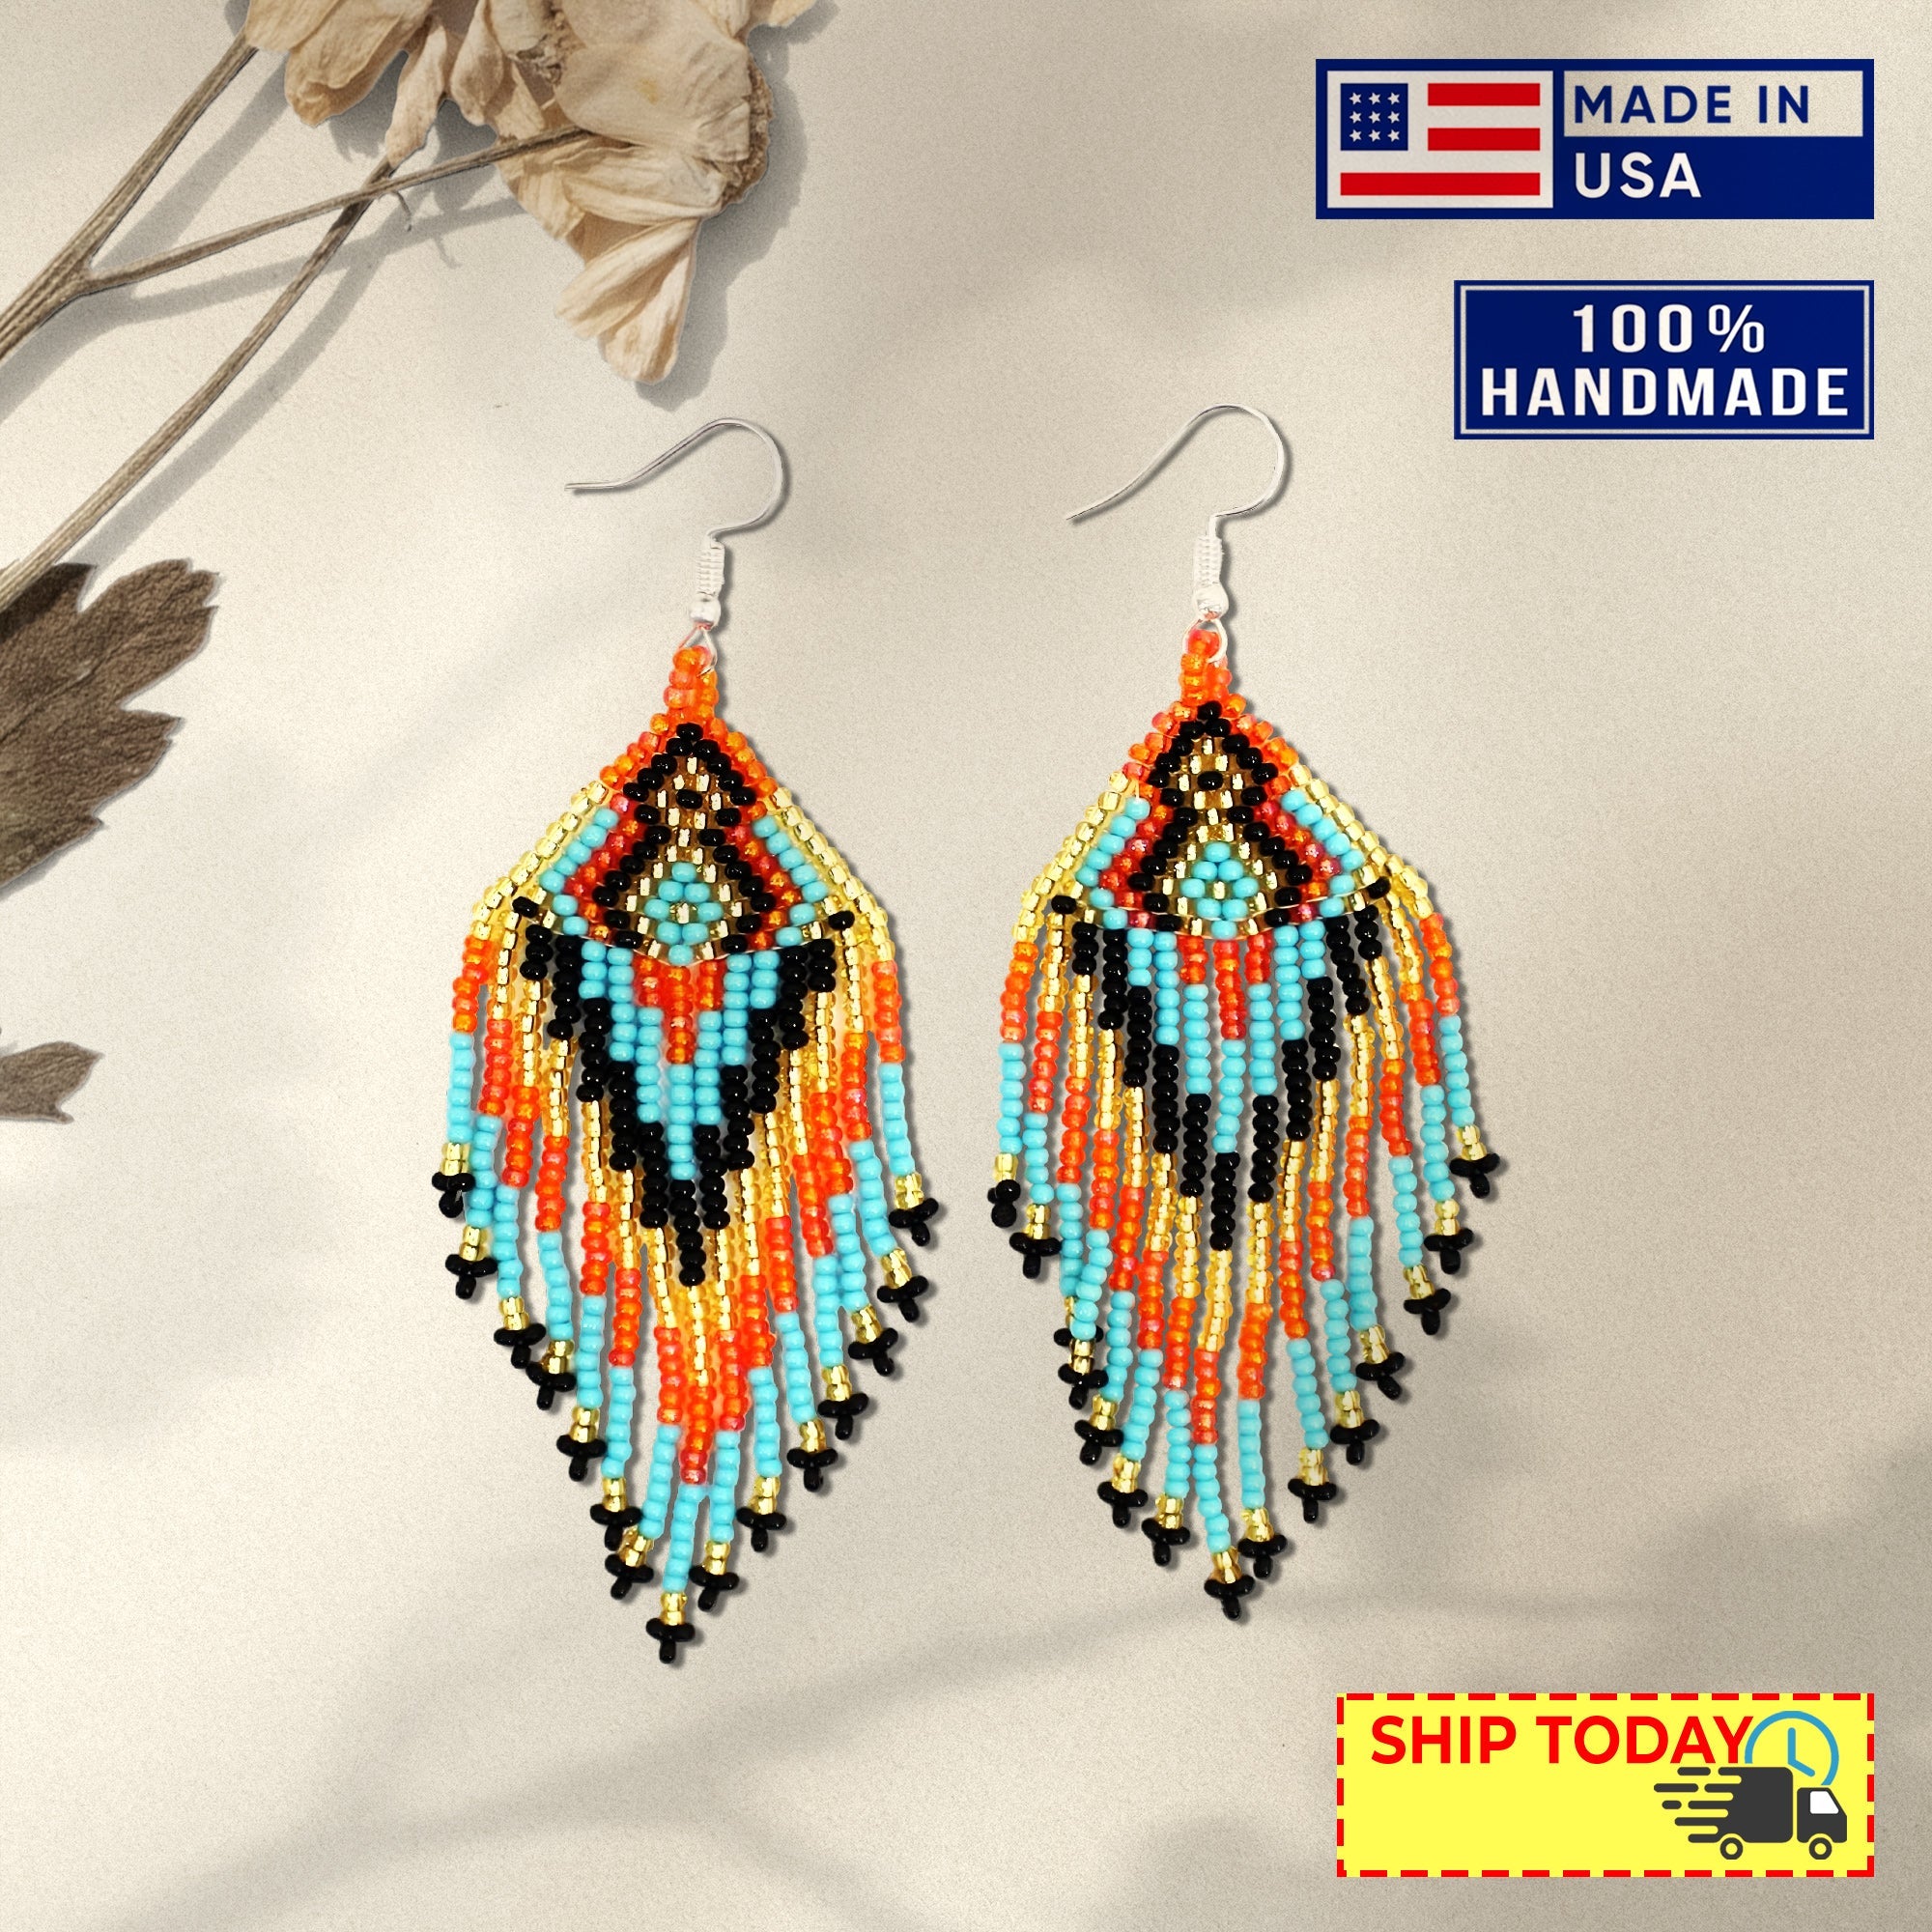 SALE 50% OFF - Multi Colored Beaded Handmade Earrings For Women